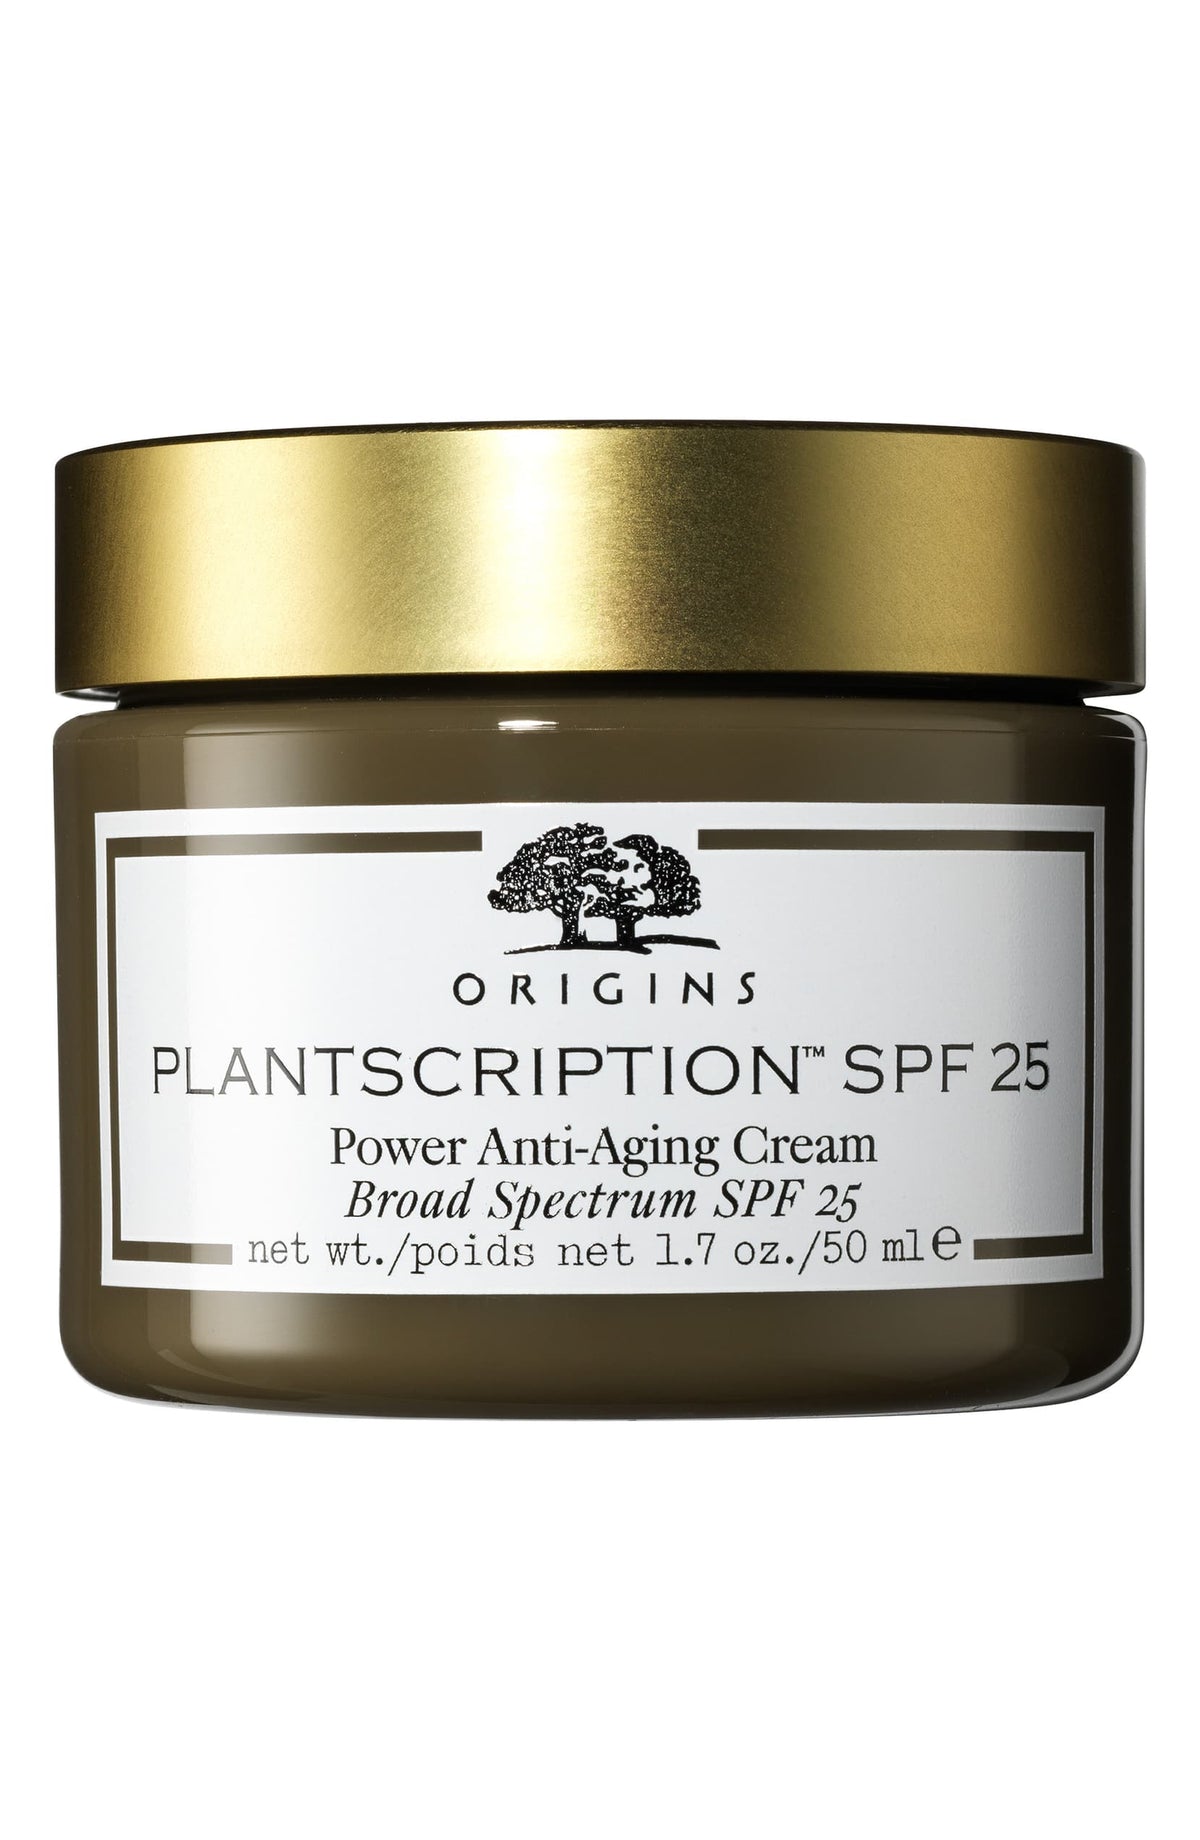 Origins Plantscription SPF 25 Power Anti-aging Cream - eCosmeticWorld